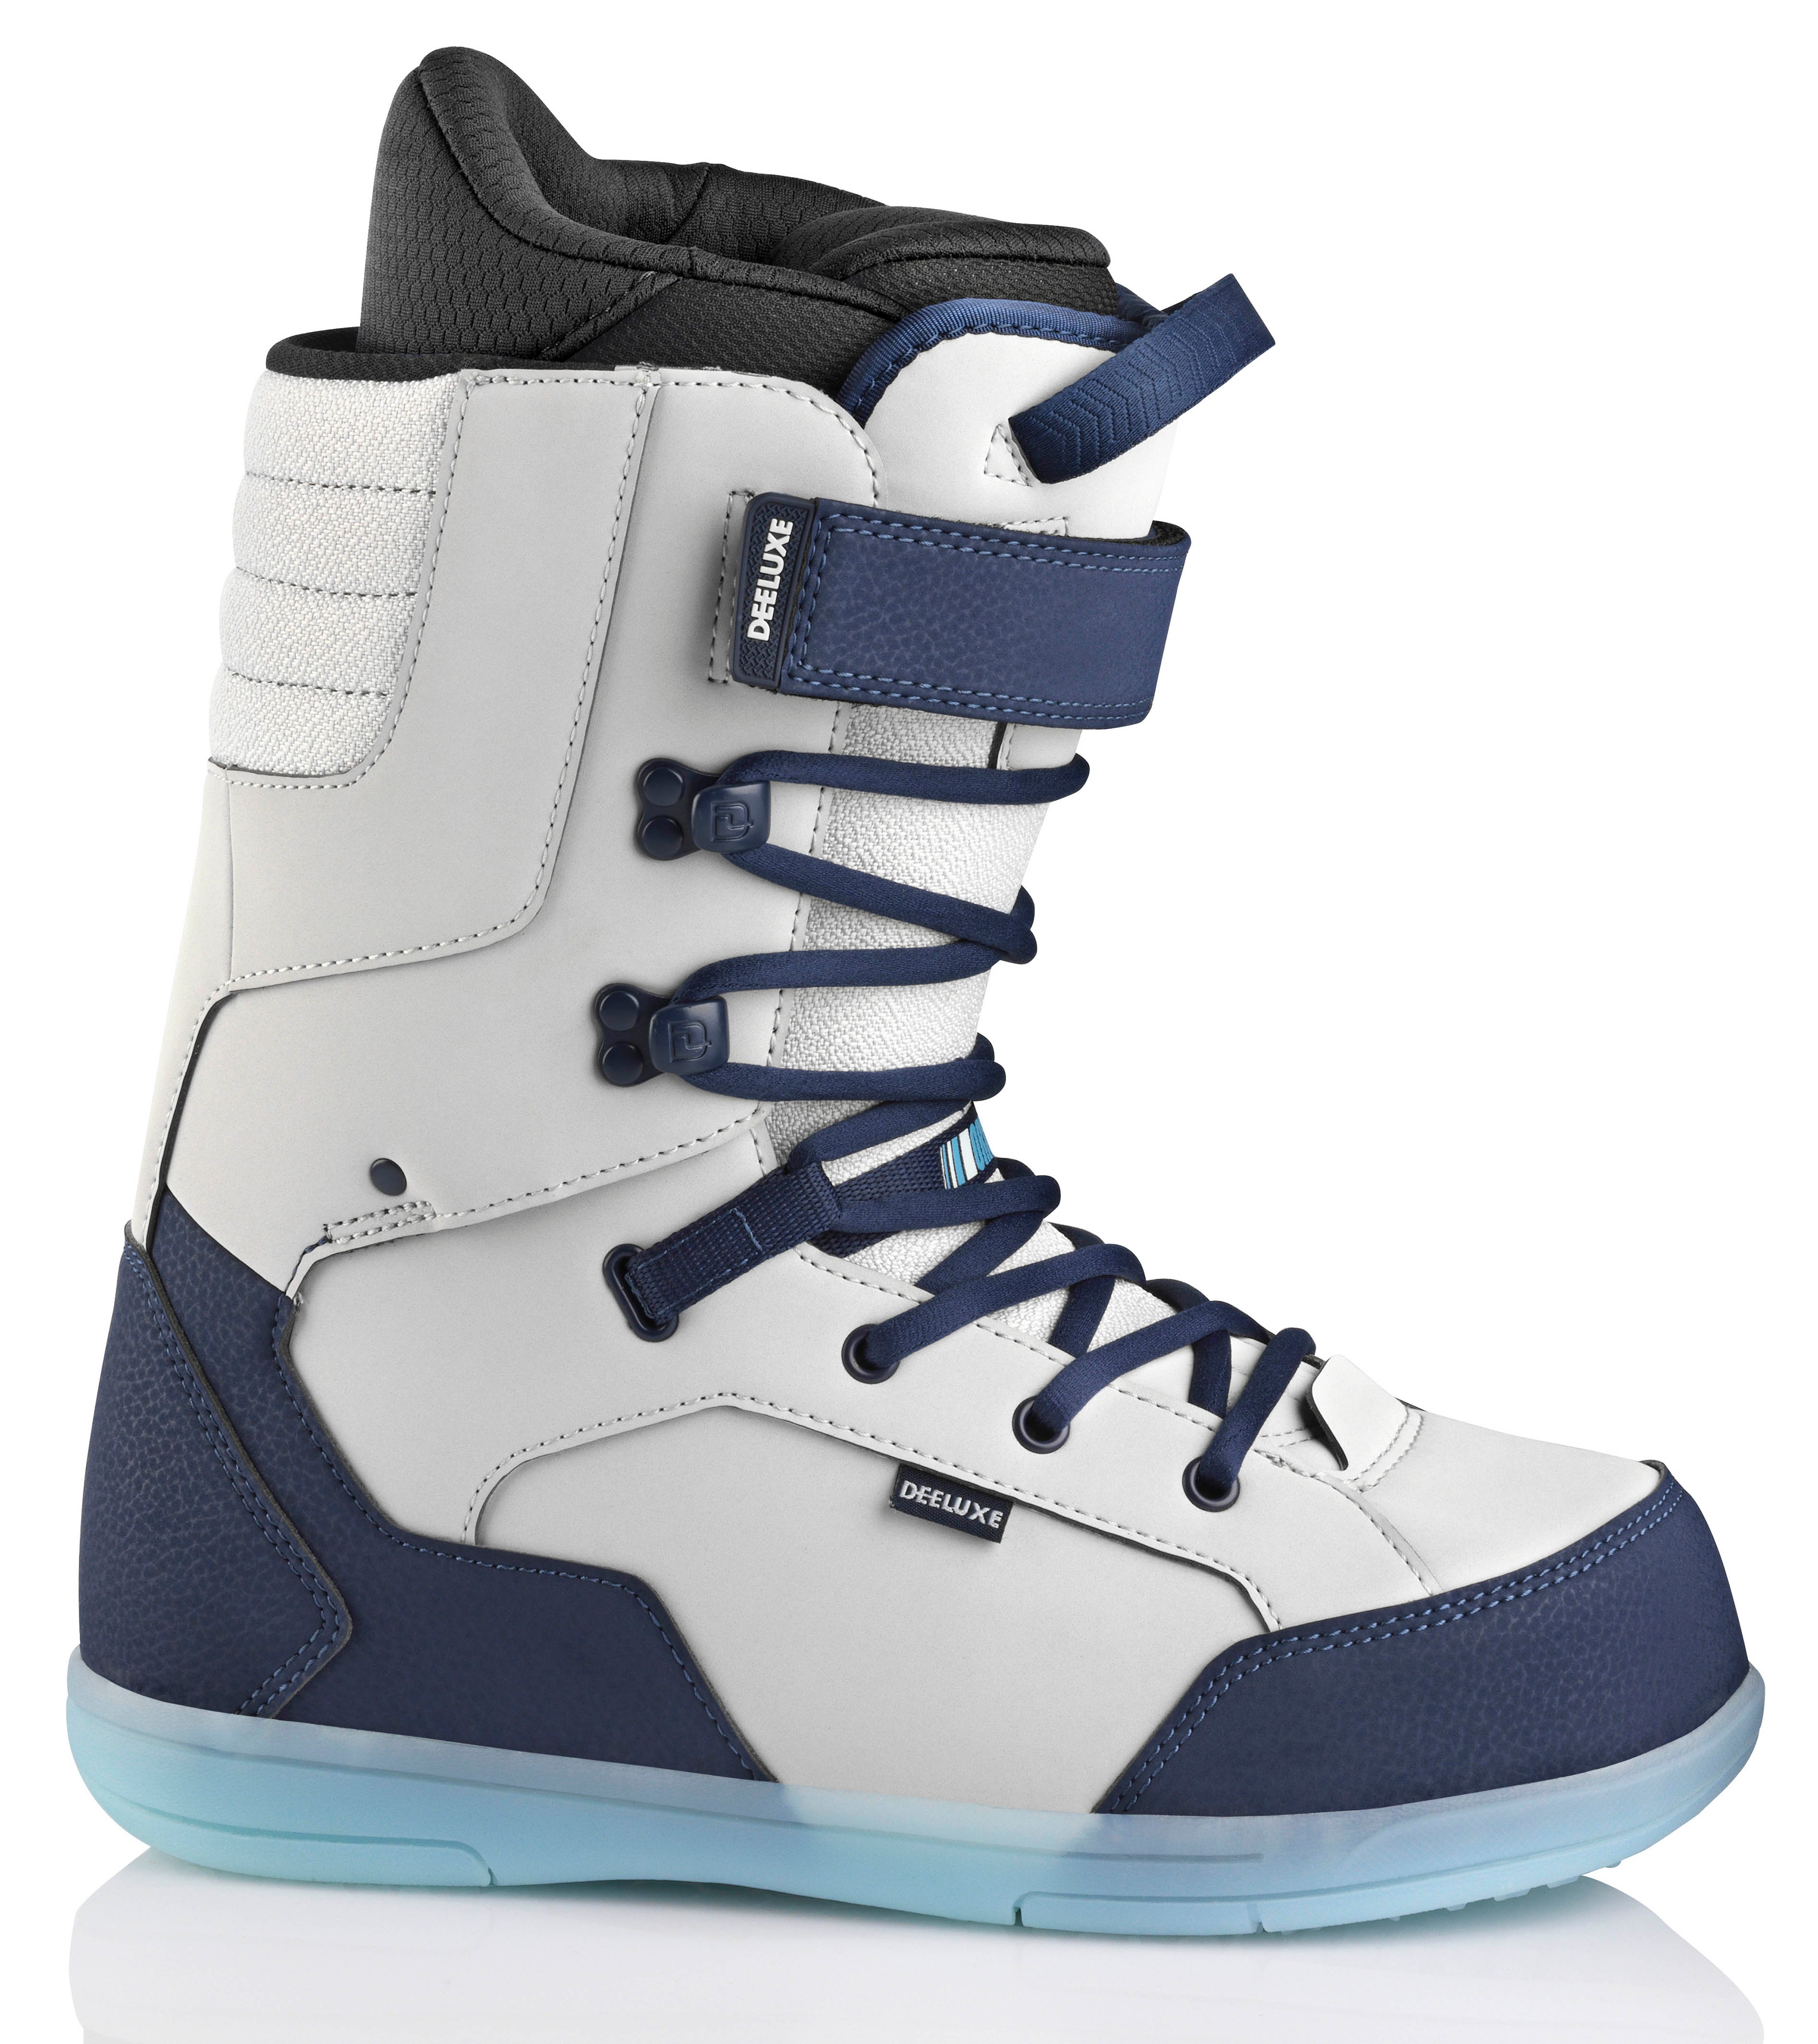 Method Mag The 2020 Original Snowboard Boot